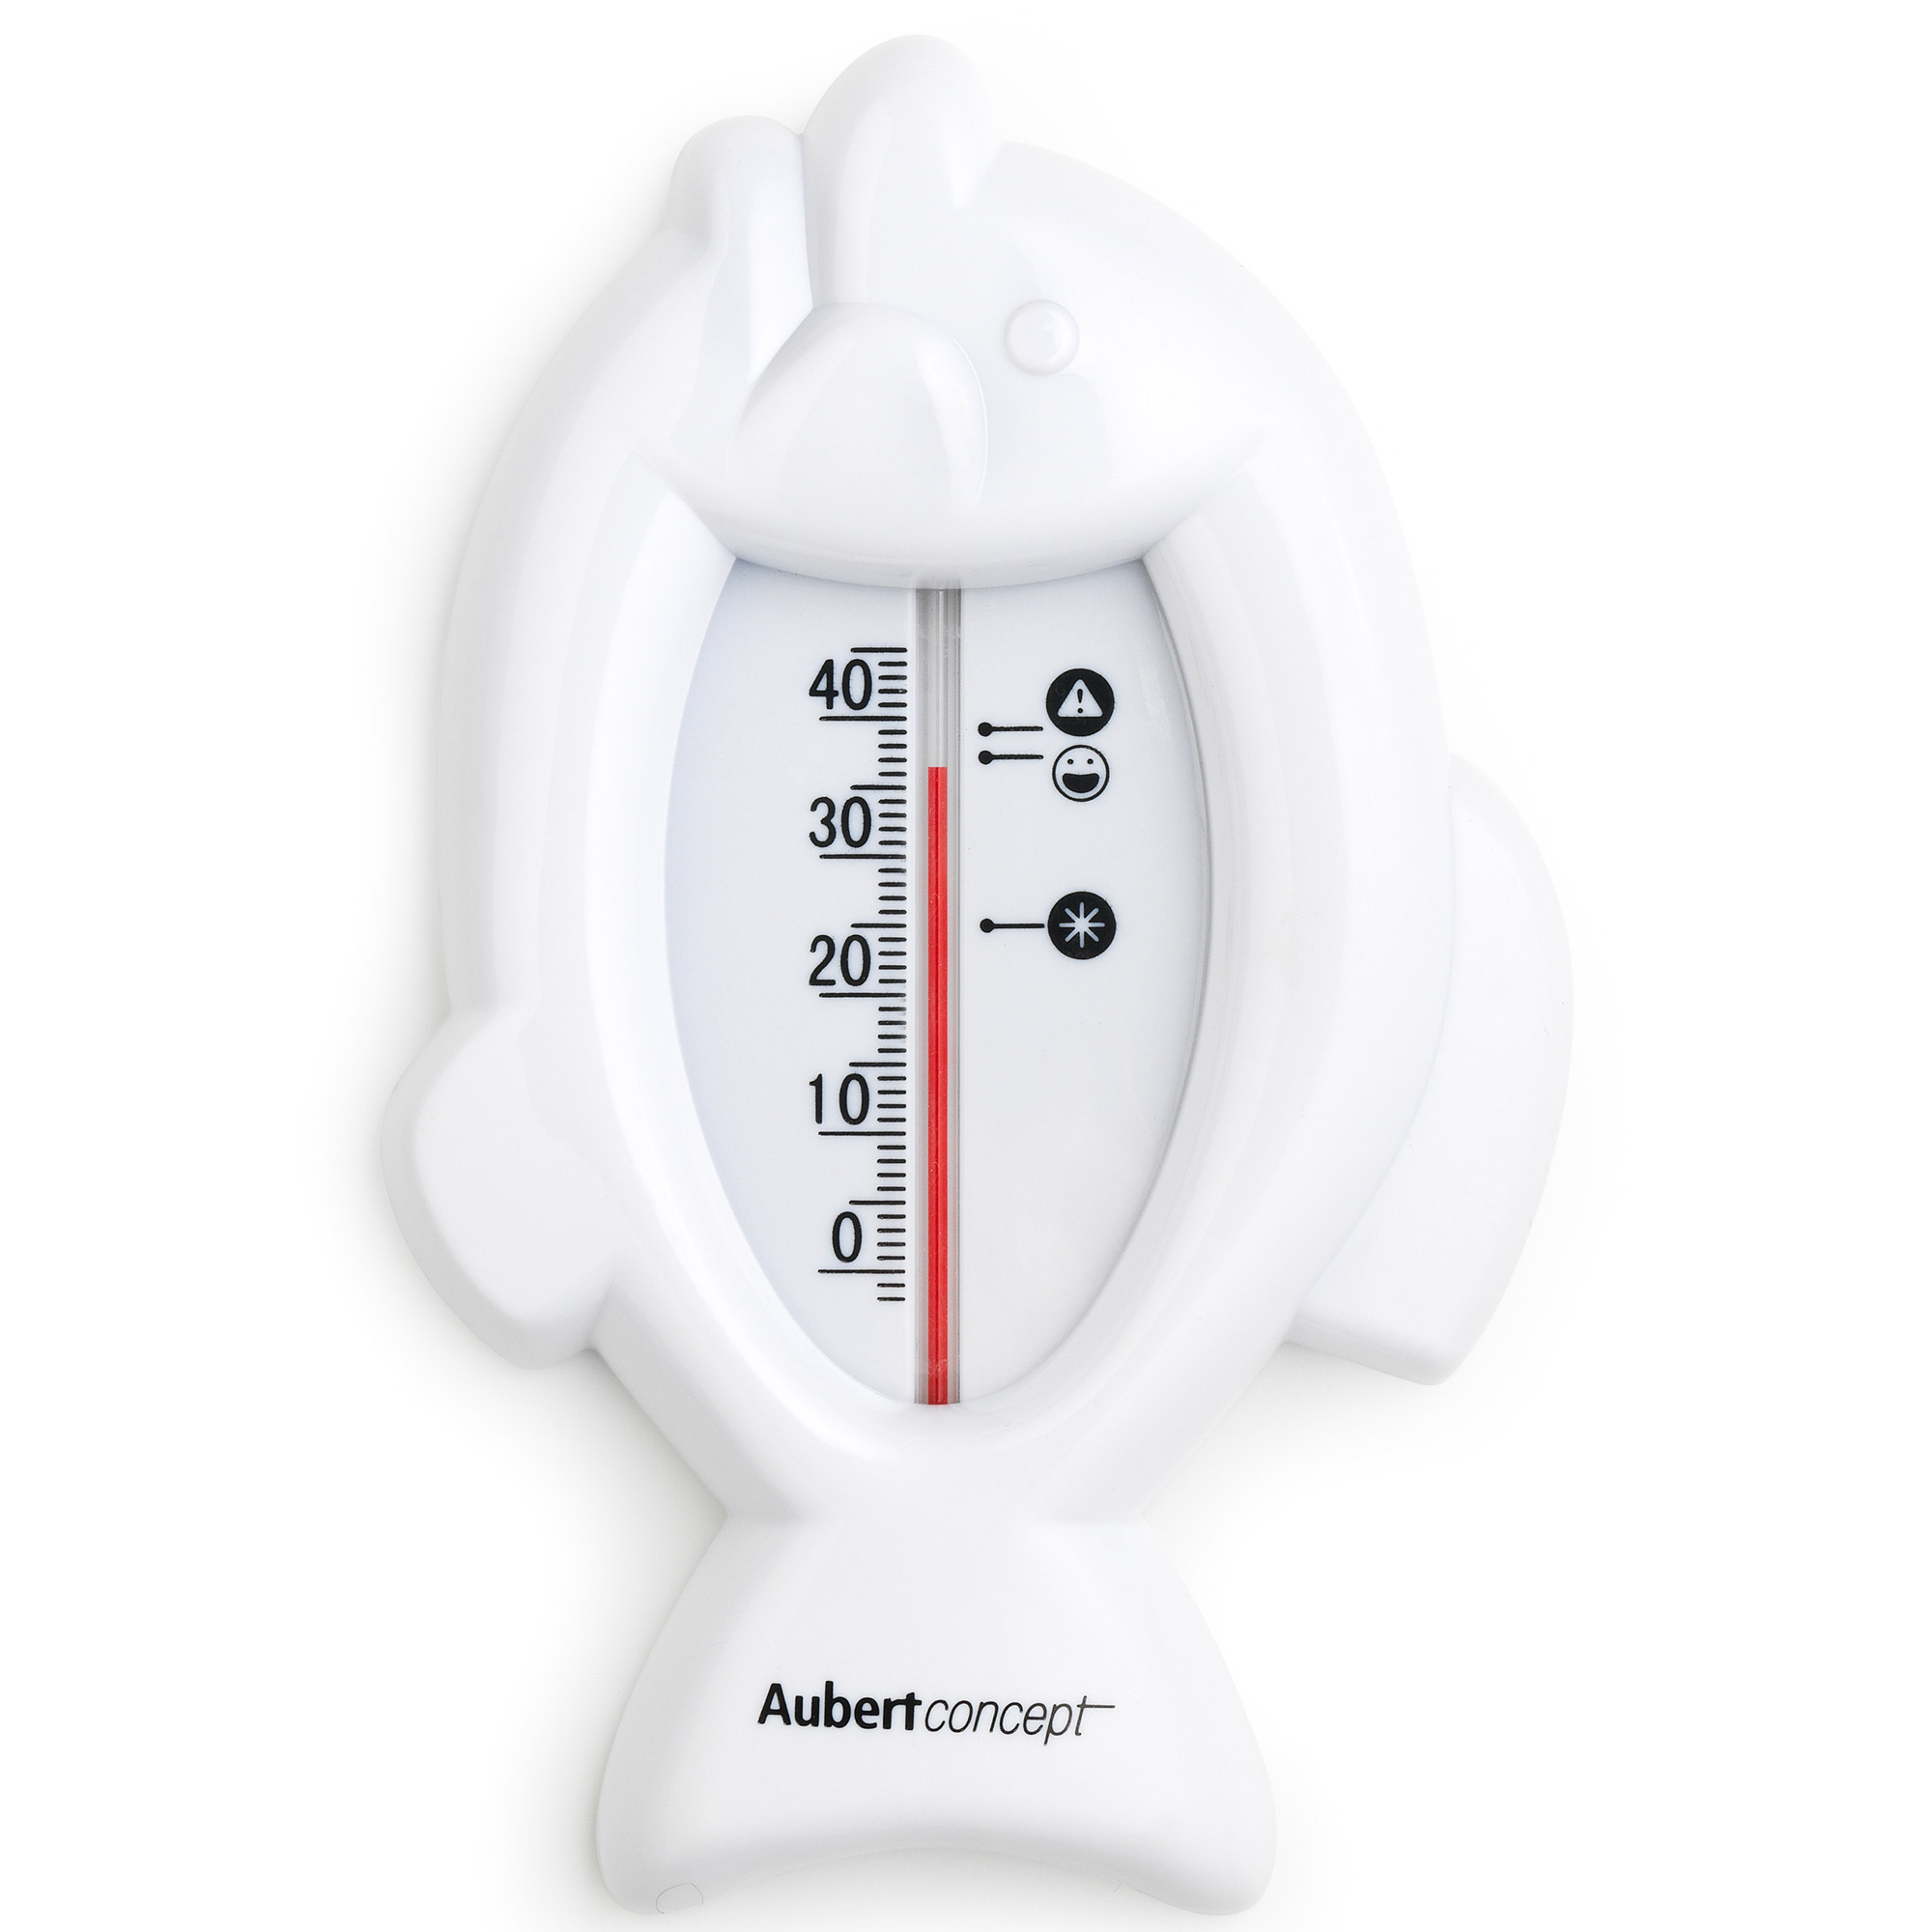 Thermometre De Bain Poisson Blanc De Aubert Concept Thermometres Aubert